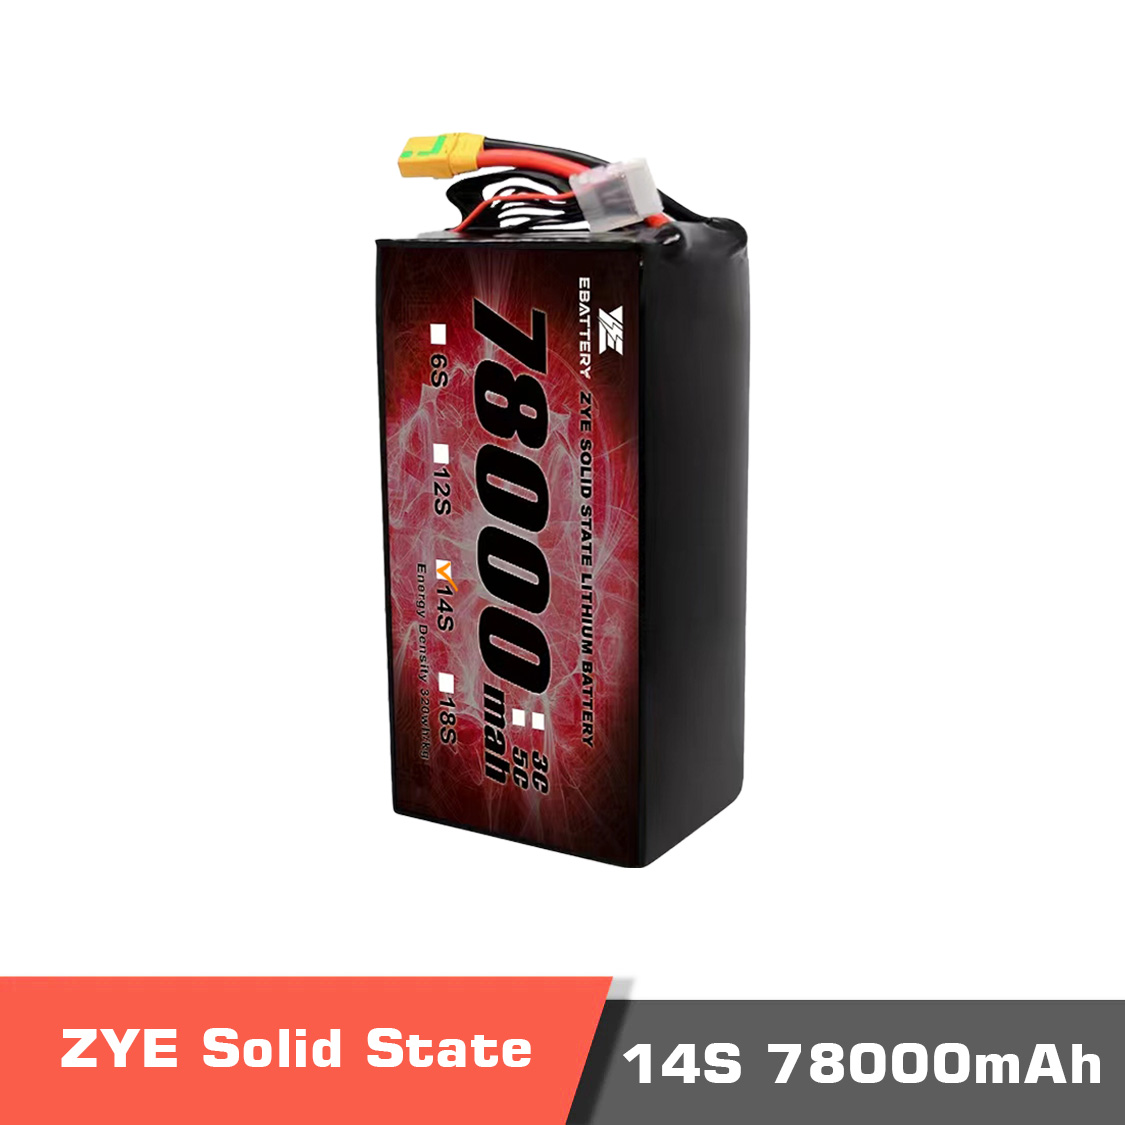 78000 14stemp.2 - ZYE Power Ultra HV Semi Solid-State Battery, Ultra HV Semi Solid-State Battery, 18S 78000mAh high voltage LiPo Battery, 18S 78000mAh HV LiPo Battery, Solid-state LiPo battery, lipo battery, drone battery, 18s battery, high energy density battery, UAV, drone, vtol, ZYE Power, ZYE power Battery - MotioNew - 1